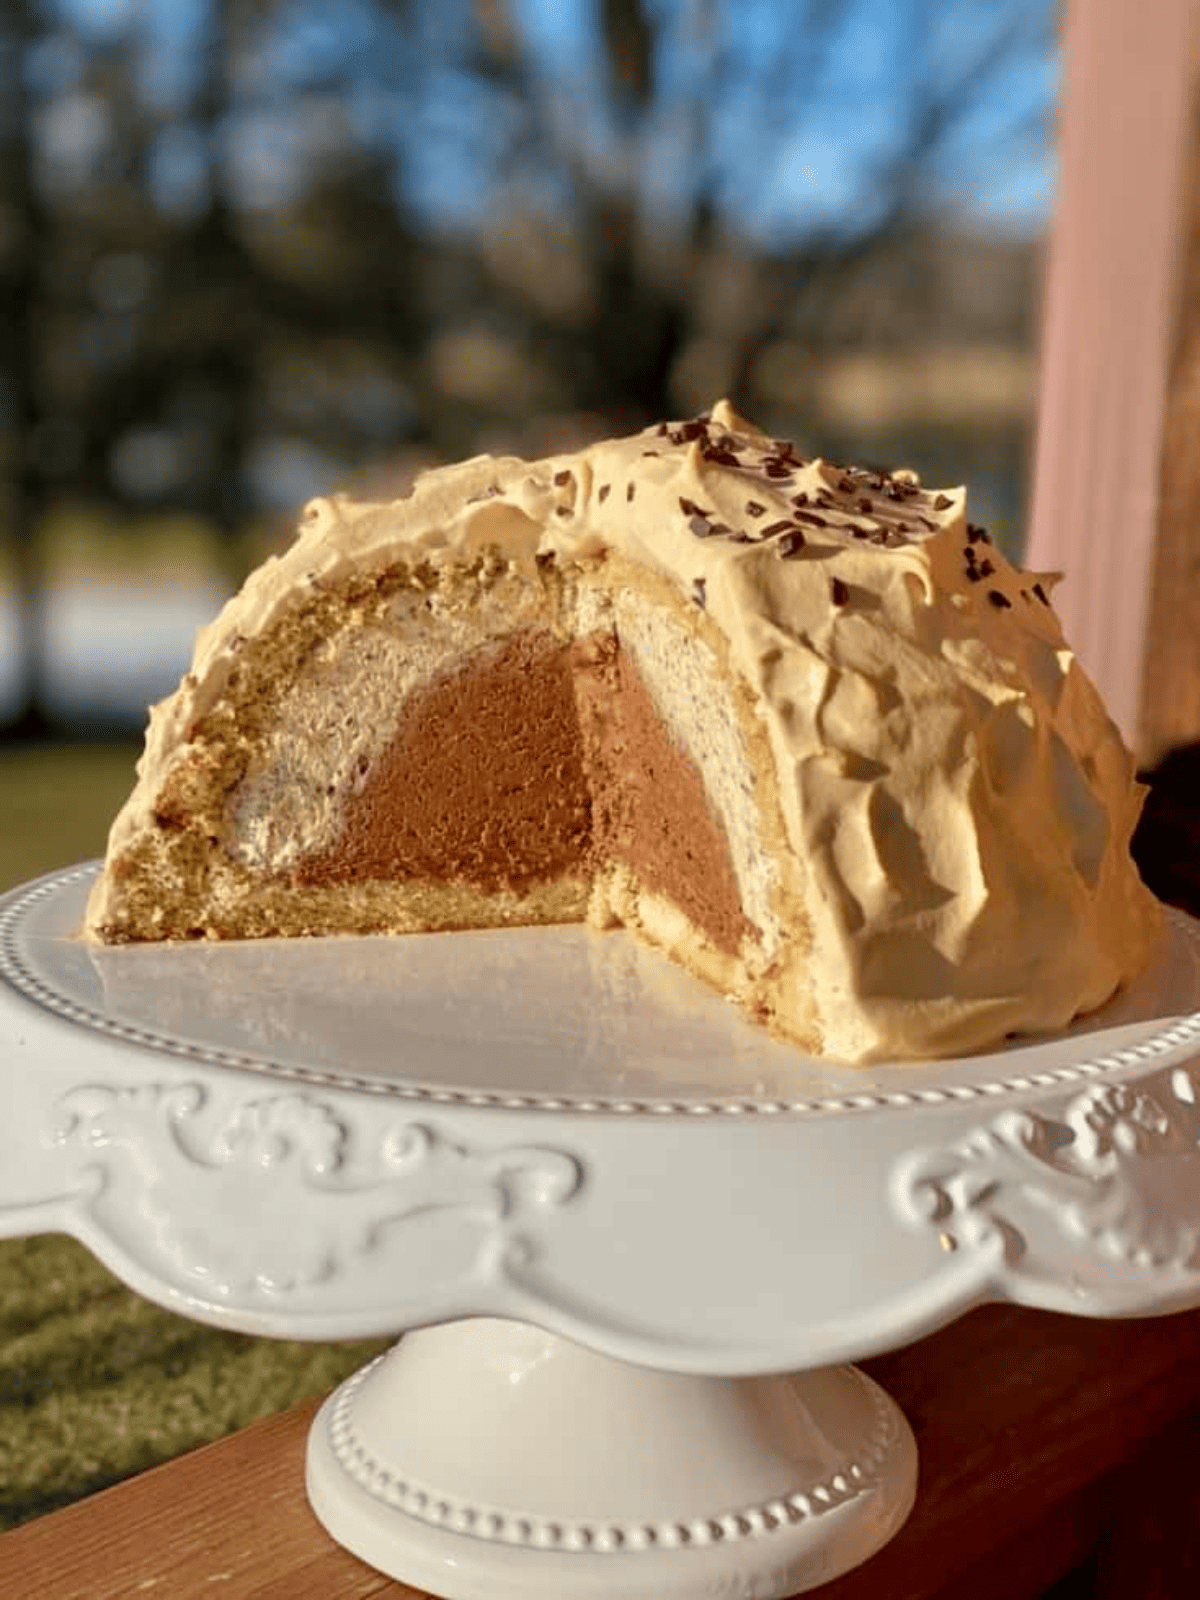 Fancy Dessert Zuccotto: a Creamy Italian Dessert Cake